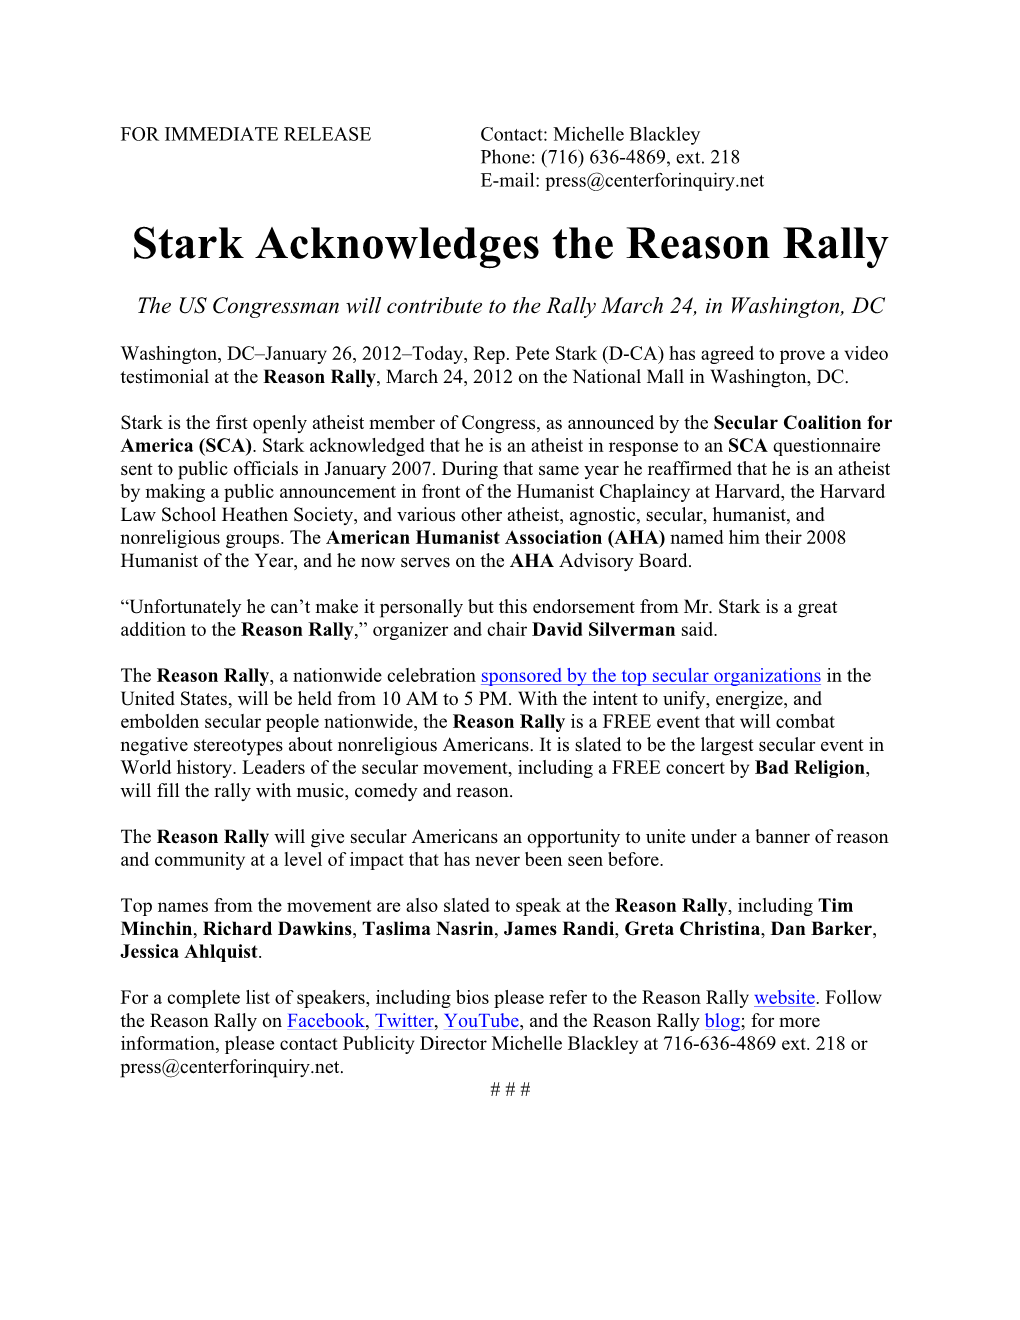 Congressman Pete Stark Acknowledges Reason Rally